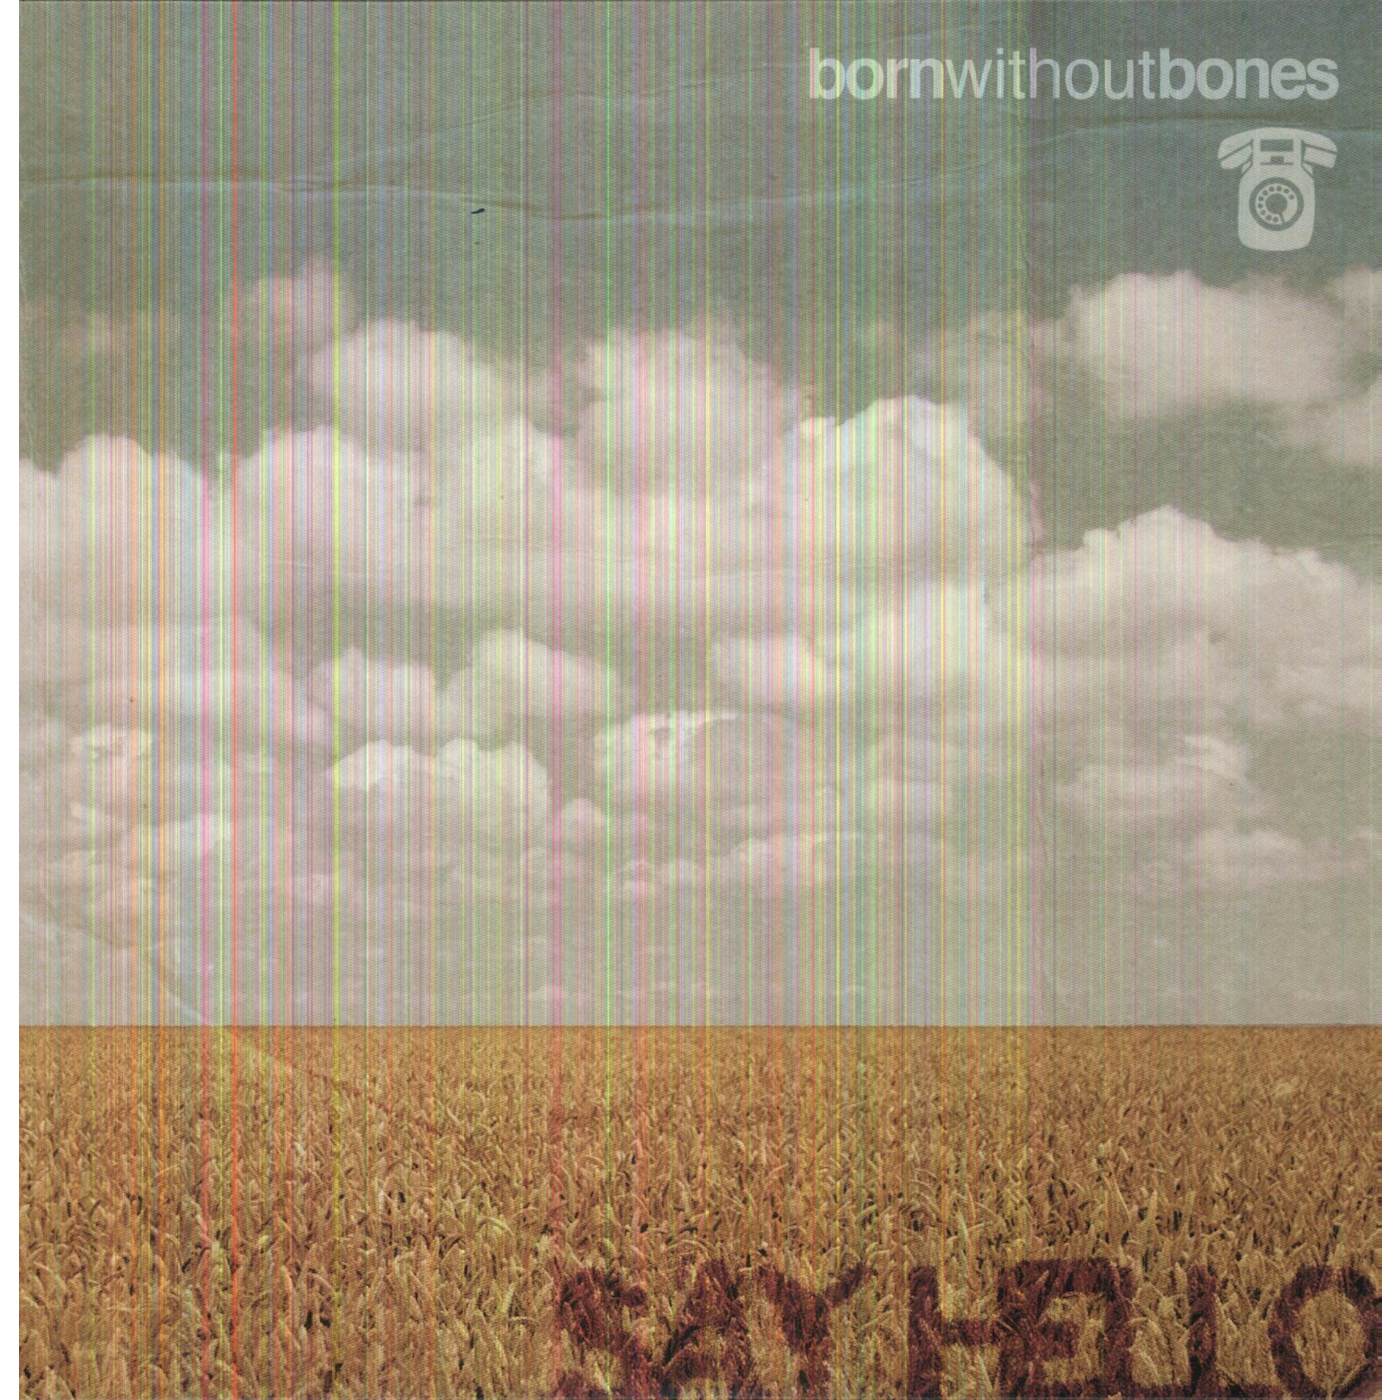 Born Without Bones Say Hello Vinyl Record